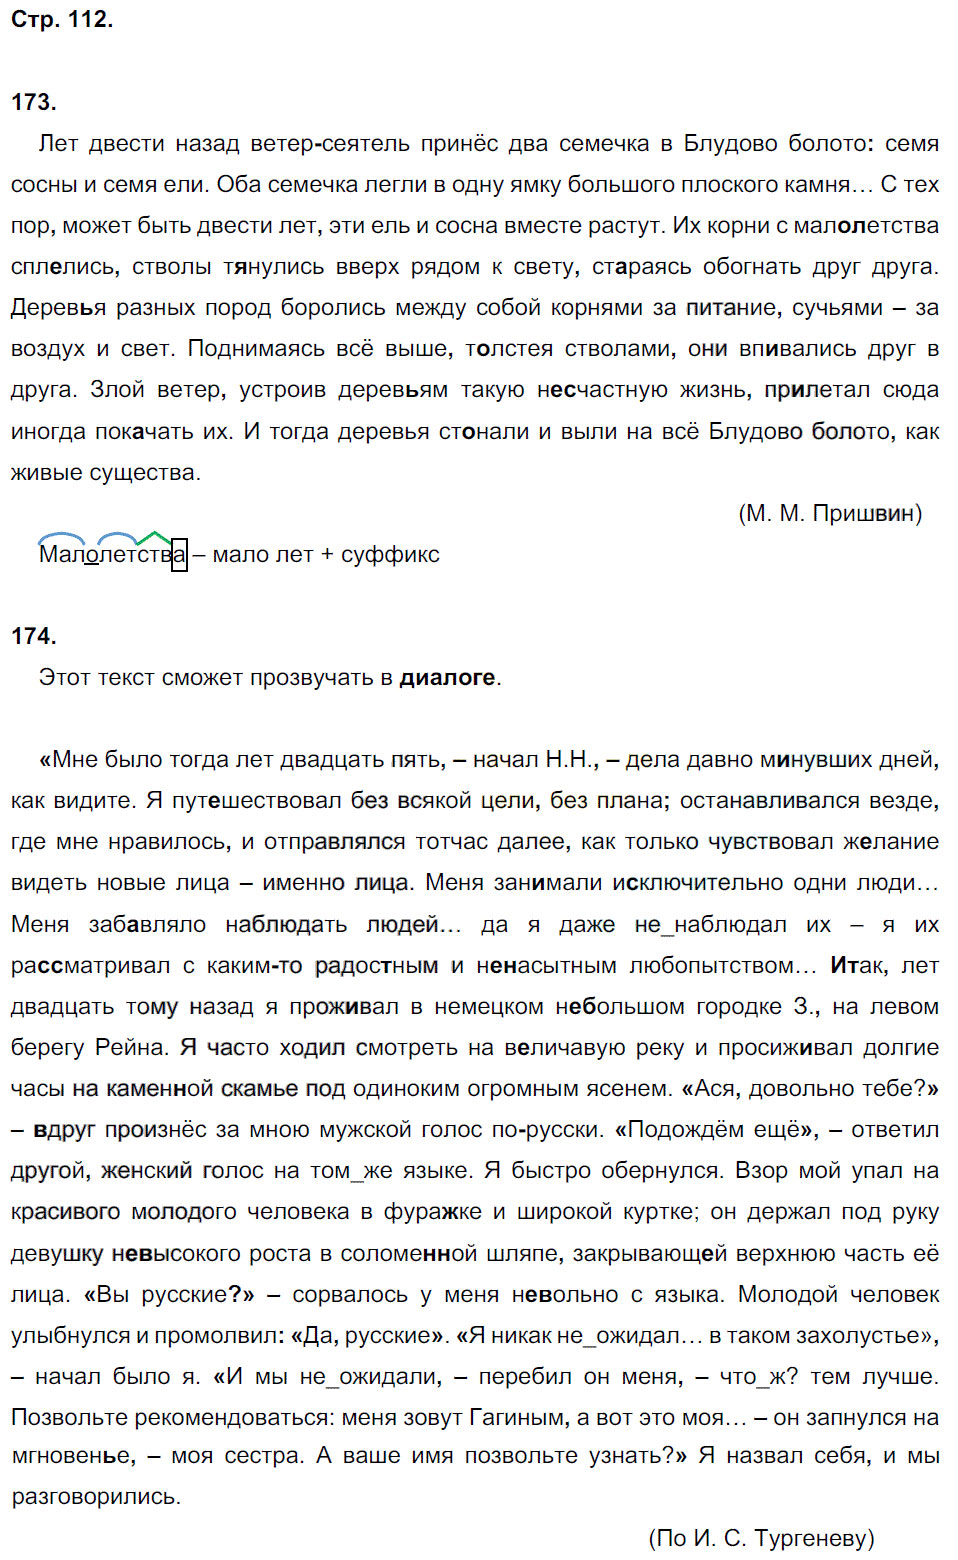 гдз 8 класс рабочая тетрадь страница 112 русский язык Кулаева